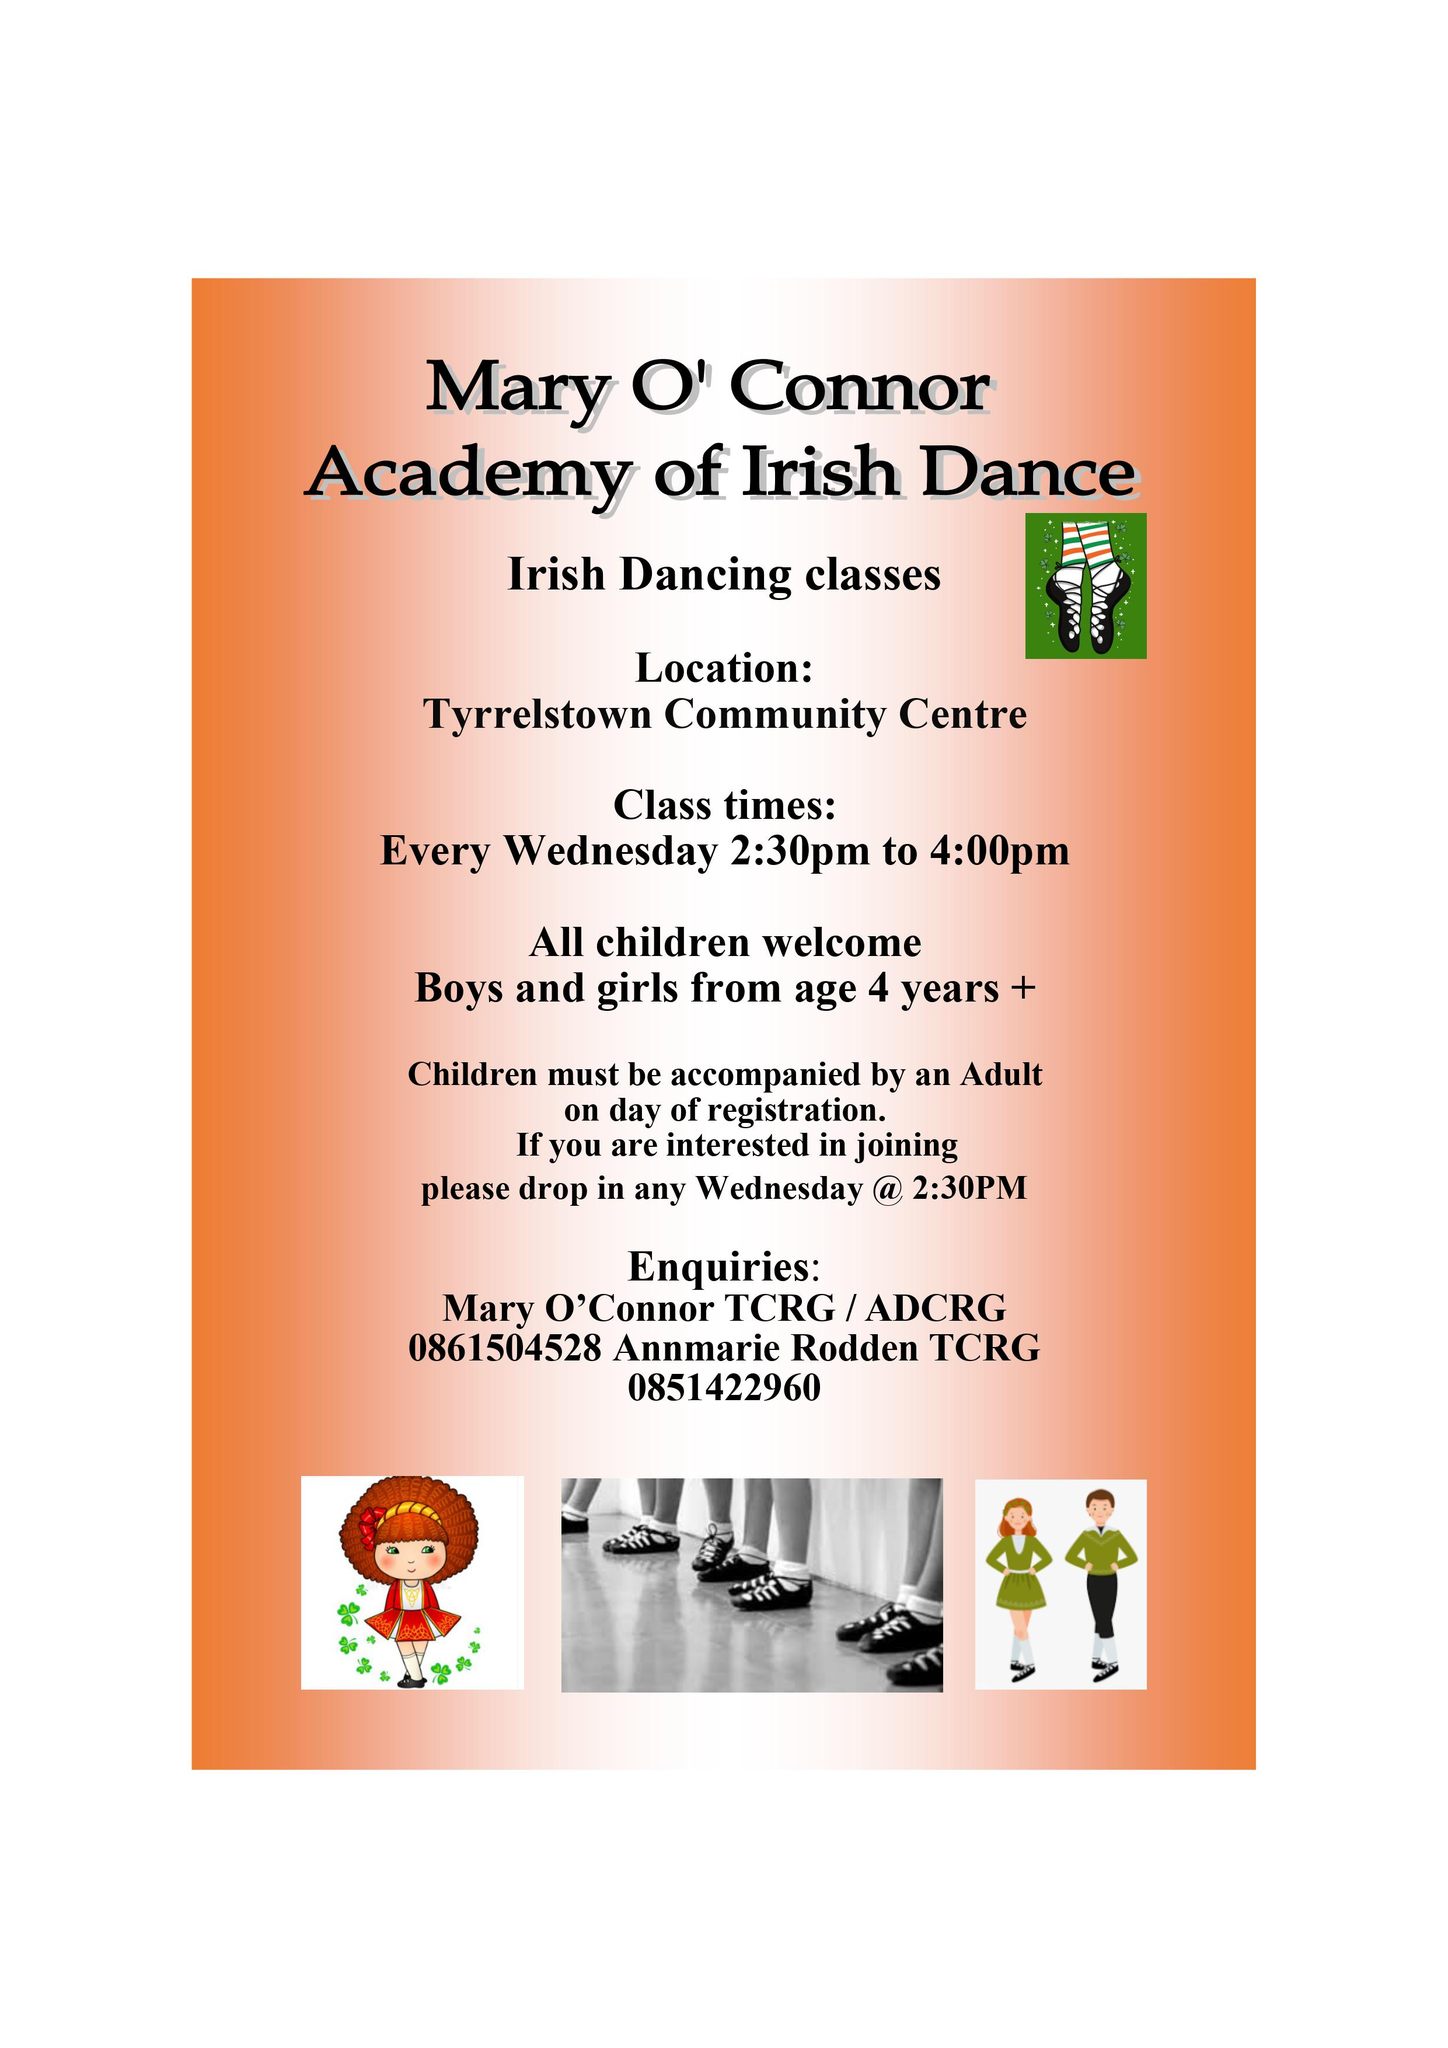 Mary O’Connor Irish Dance Academy